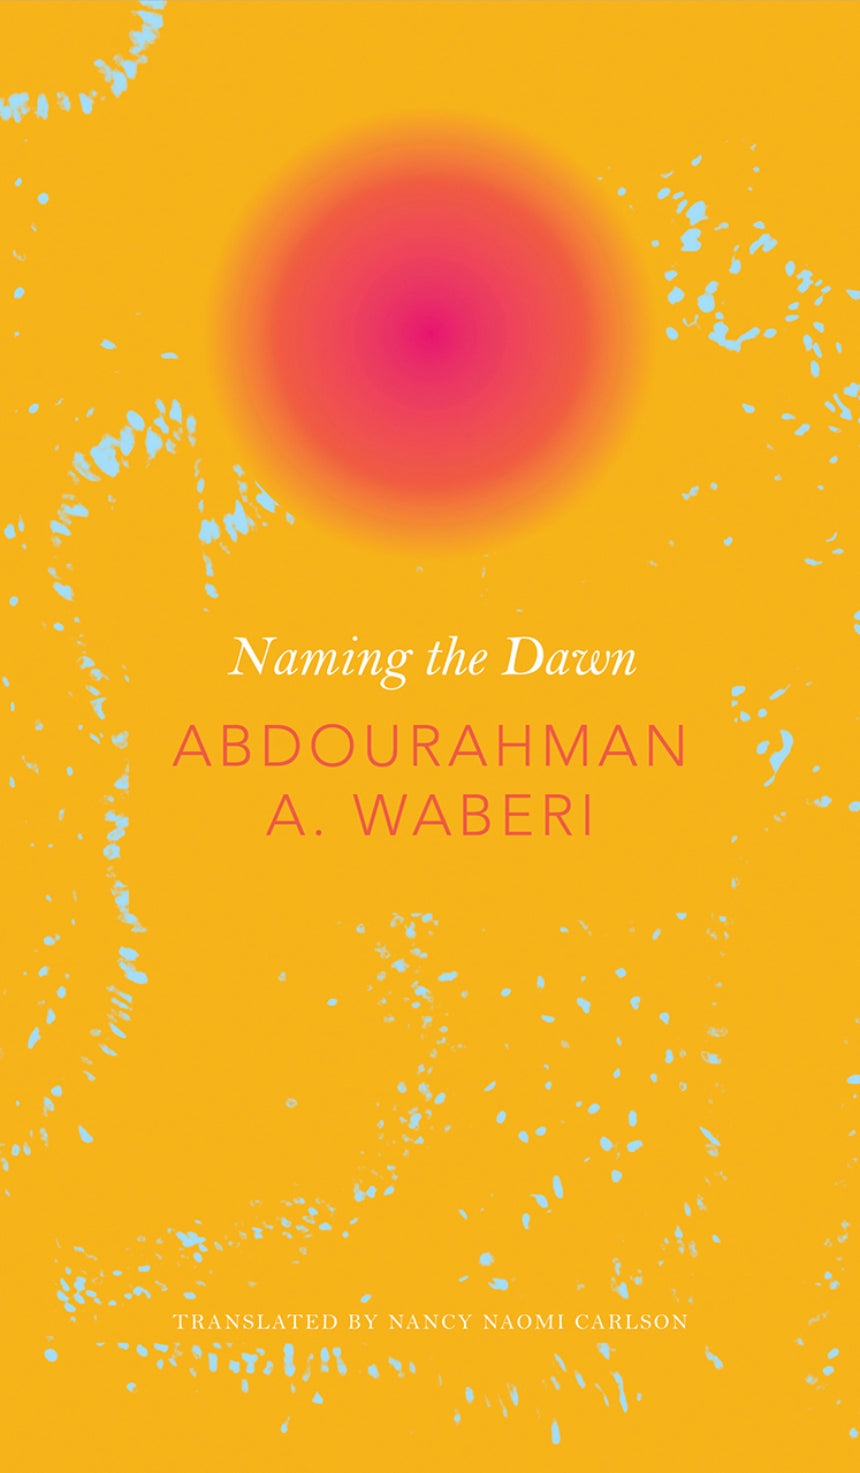 Waberi, Abdourahman A.: Naming the Dawn [used hardcover]